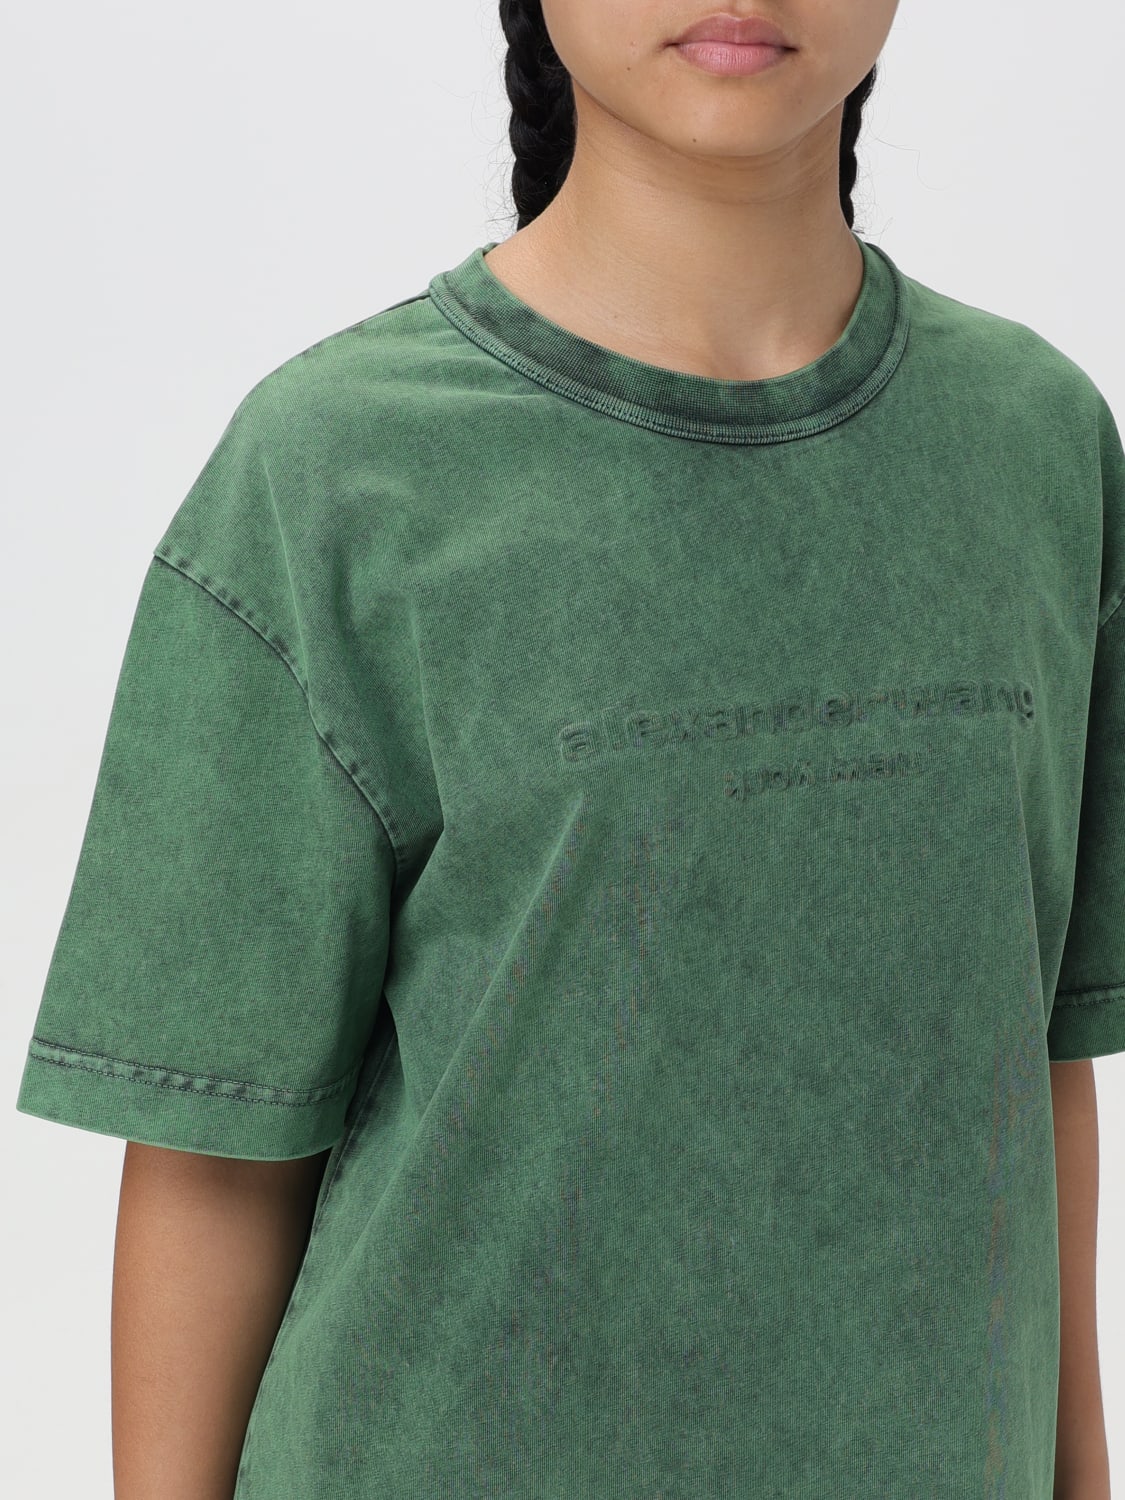 Alexander Wang Green Embossed Sweatshirt